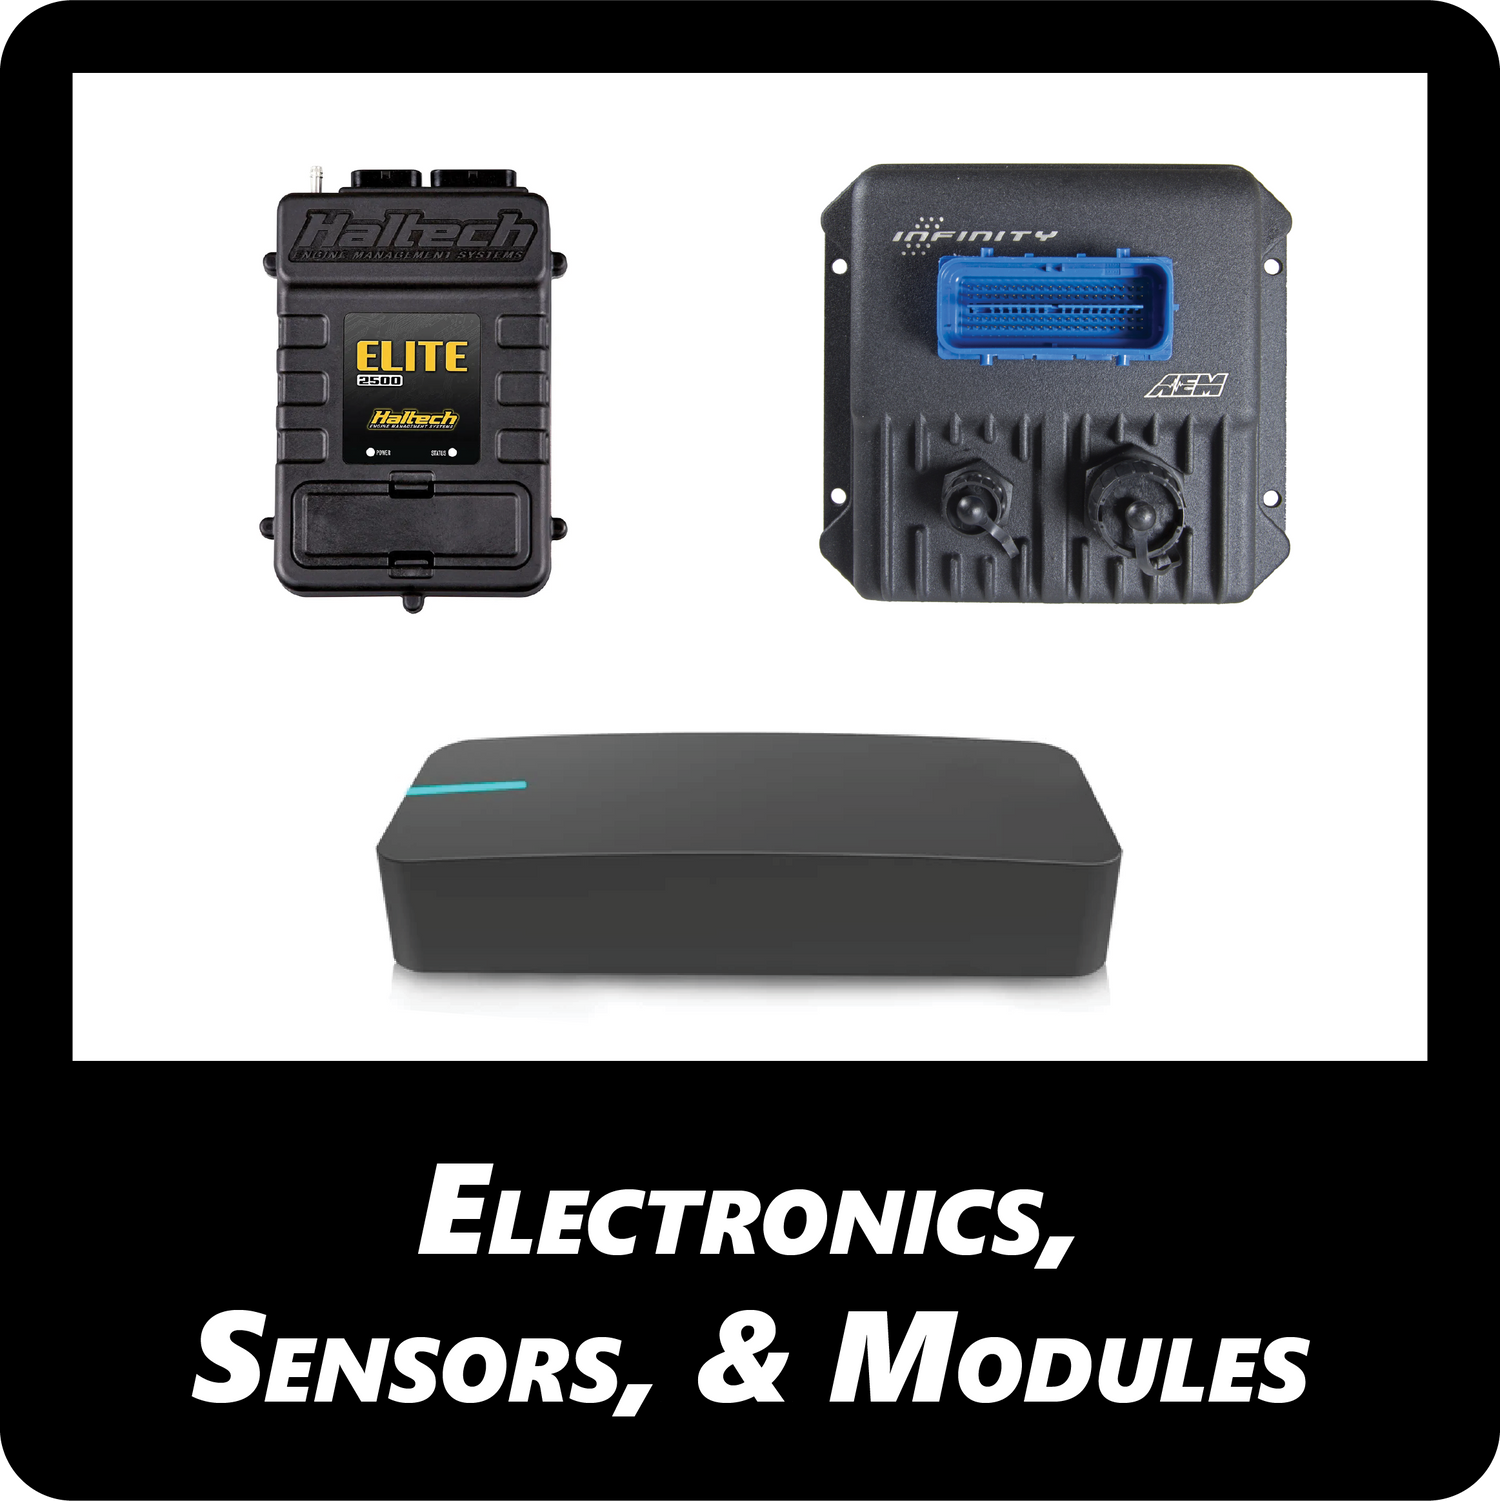 Electonics, Sensors, & Modules